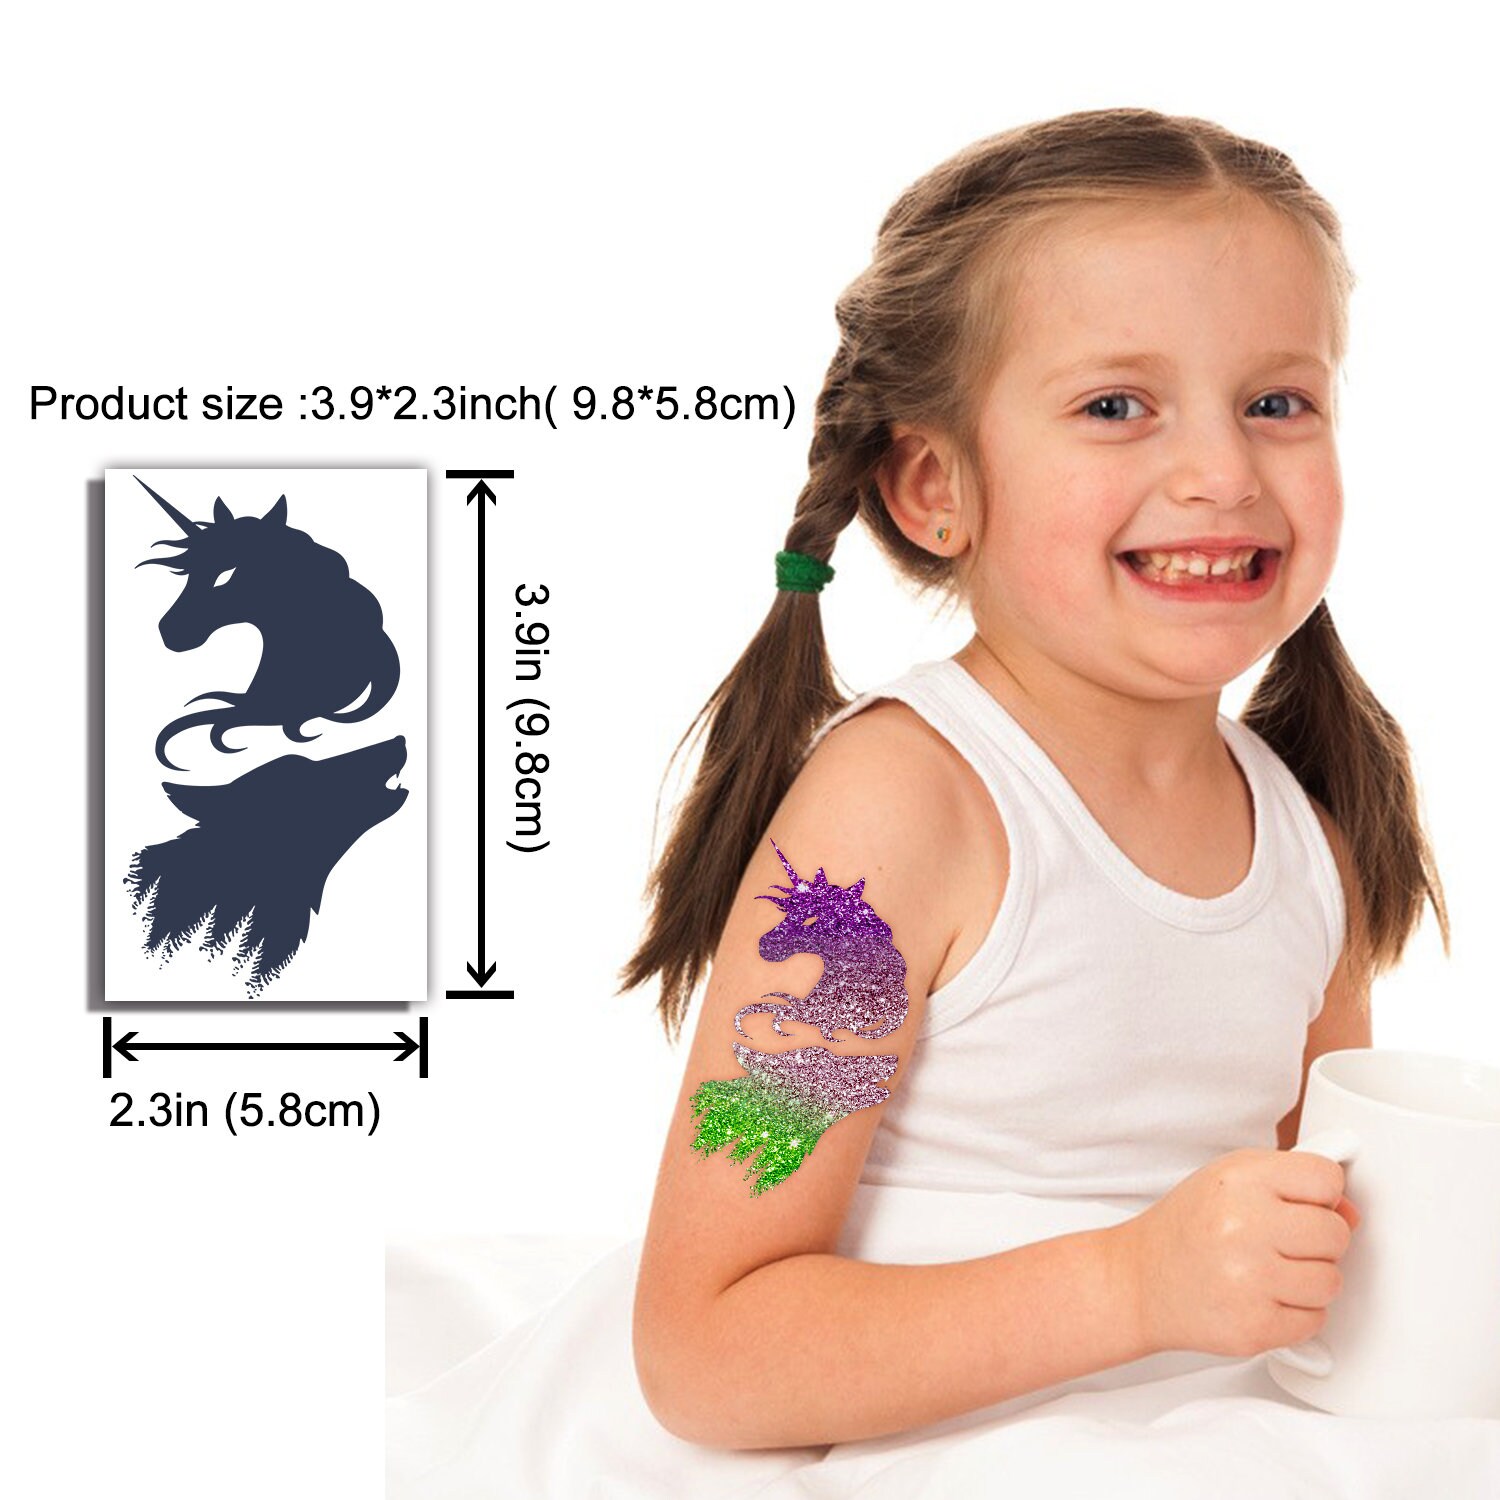 JM 16pcs Tatuajes Infantiles Tatuajes con Purpurina para Niños, Tatuajes  Efímeros para Niños, Bonitos y Geniales Tatuajes Fluorescentes Mixtos para  Niños, Niñas y Niños, Tatuajes Adhesivos Impermeables para Niños, Regalo  para Niños